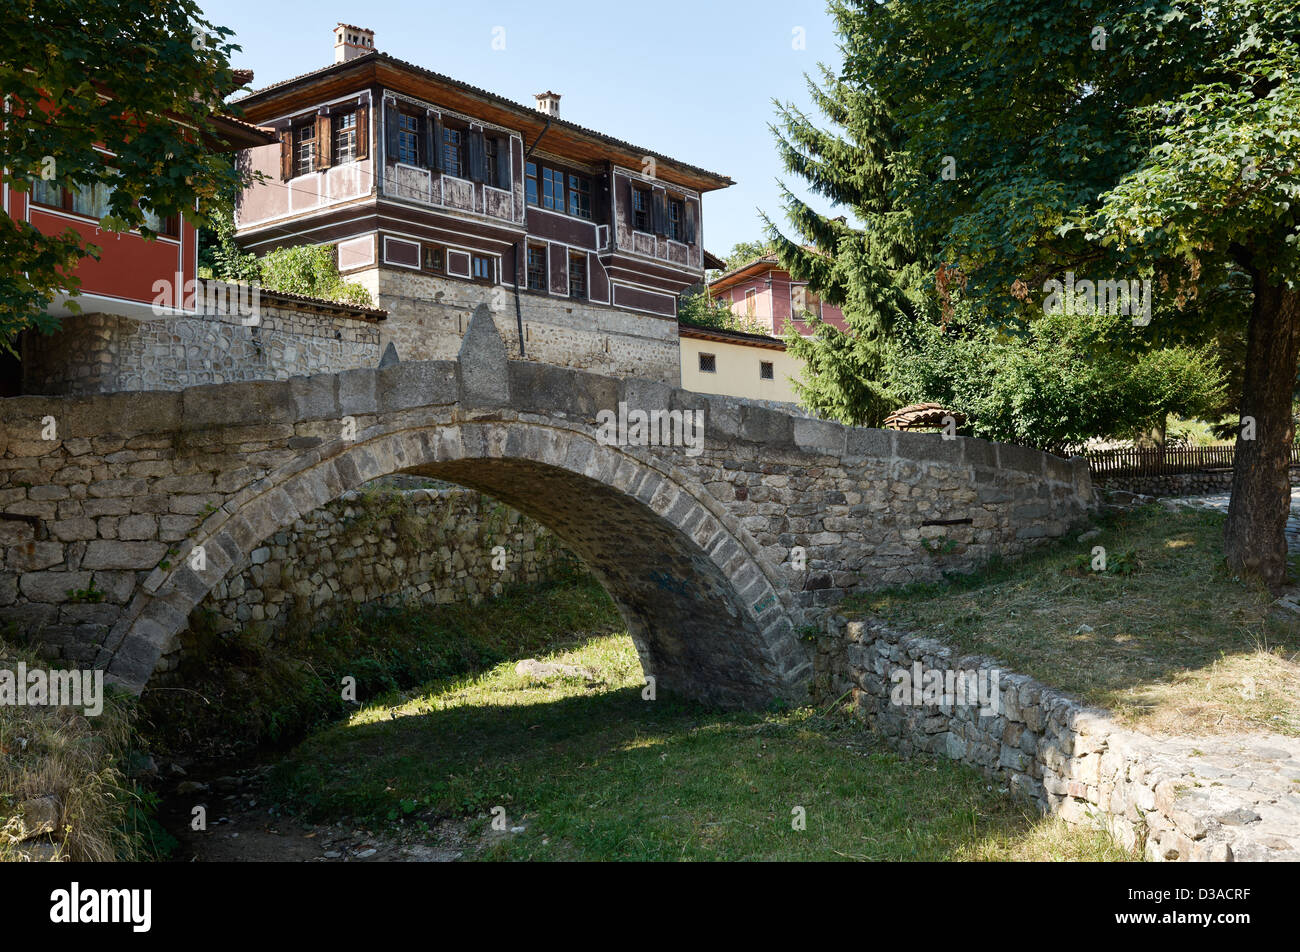 Stone bridge and old houses in village of Koprivshtitsa, Bulgaria Stock Photo